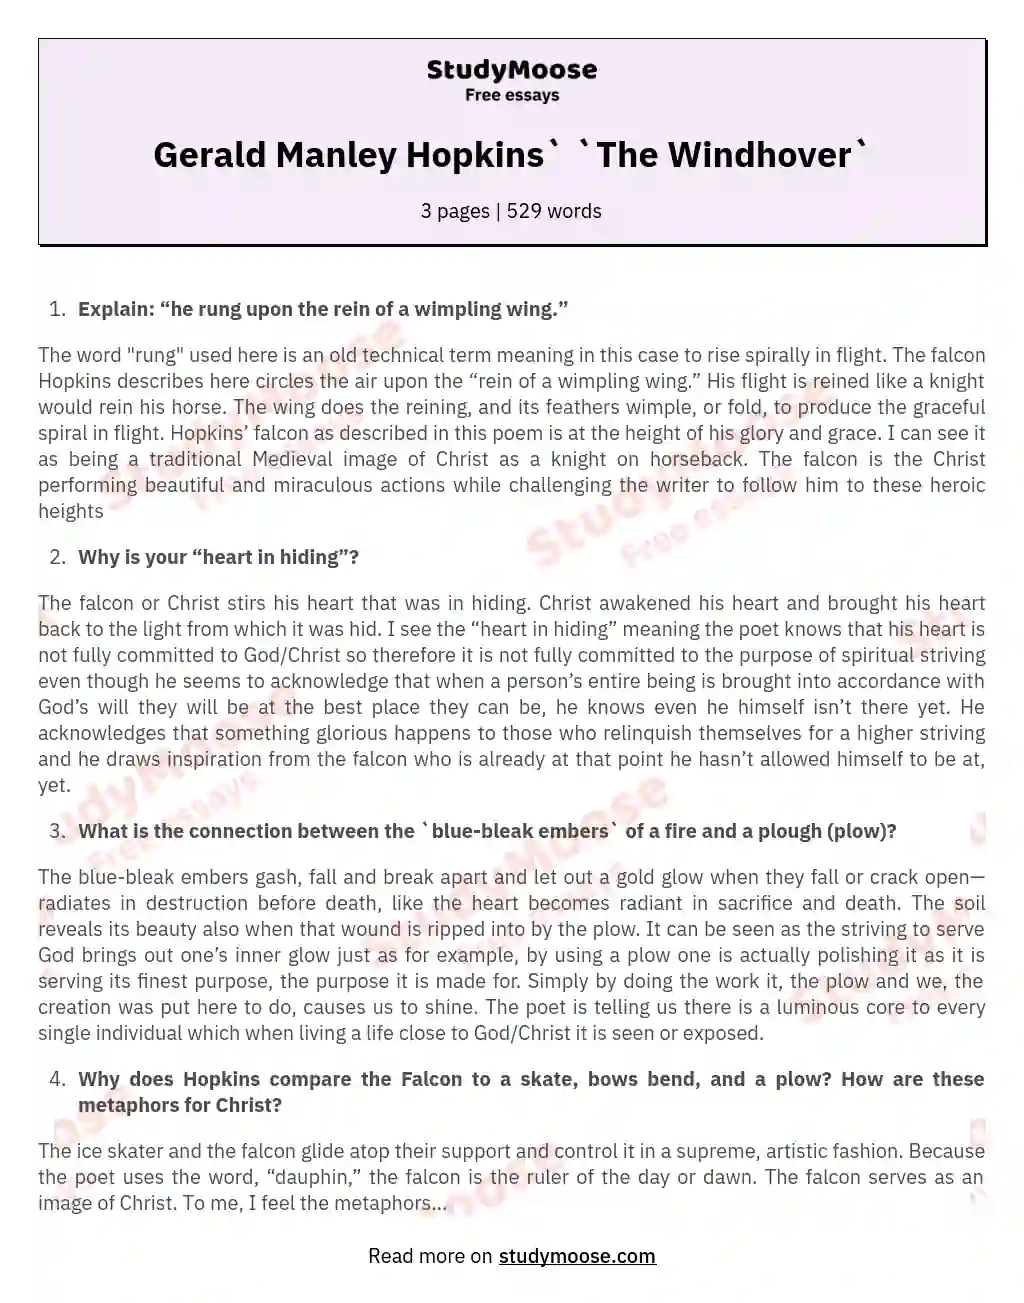 Gerald Manley Hopkins` `The Windhover` essay